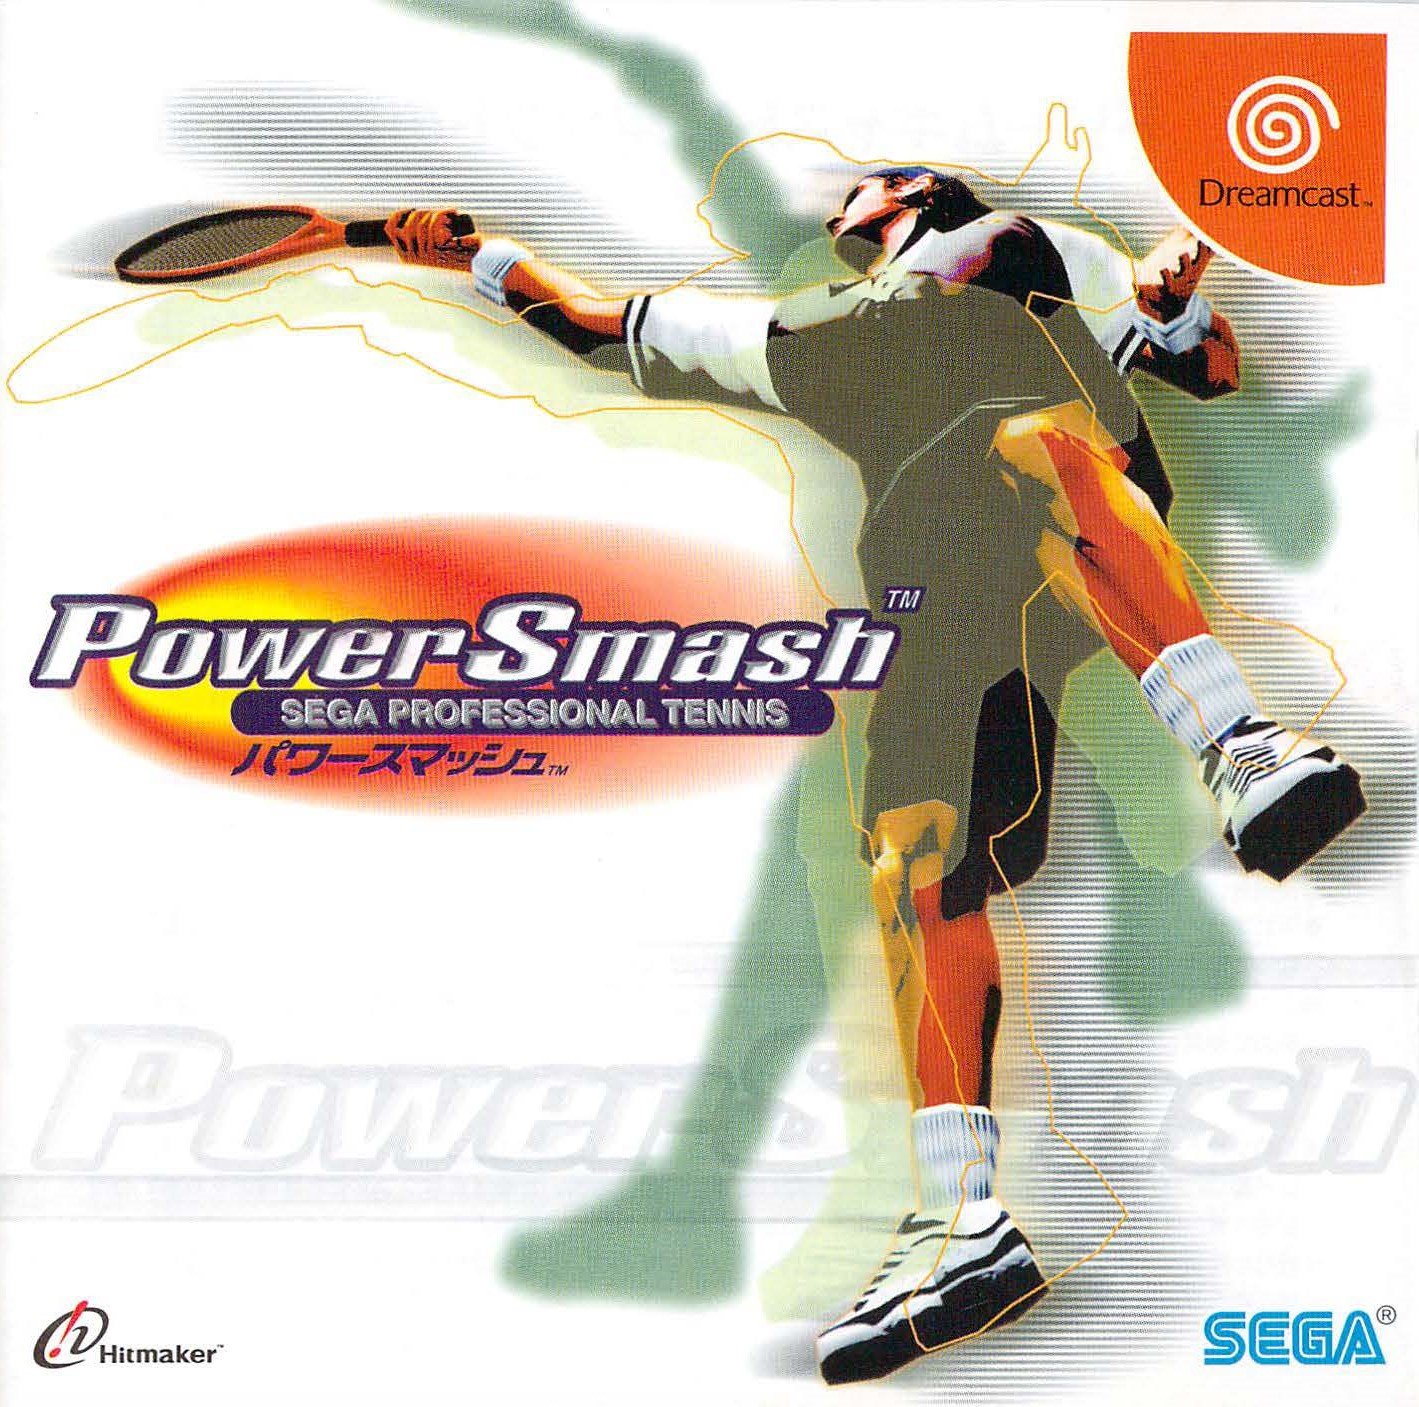 Sega Professional Tennis: Power Smash